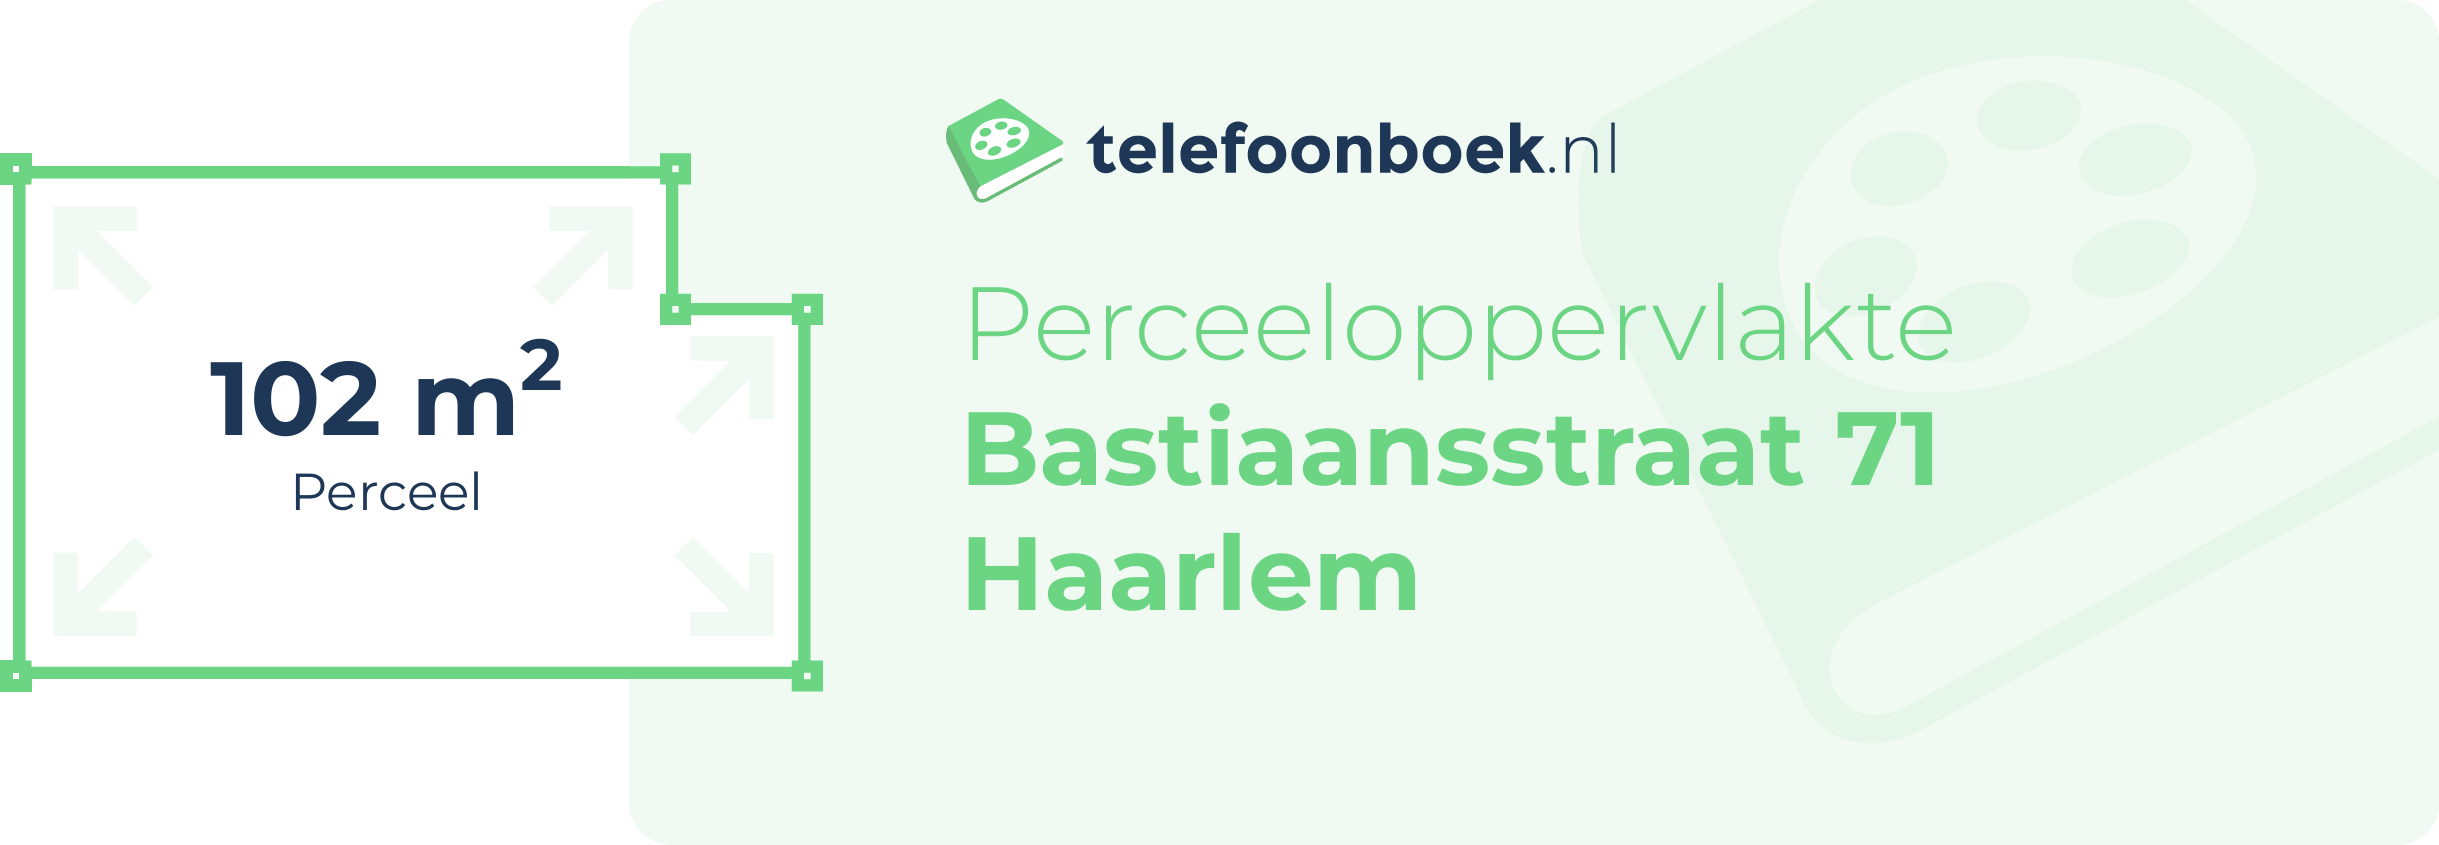 Perceeloppervlakte Bastiaansstraat 71 Haarlem